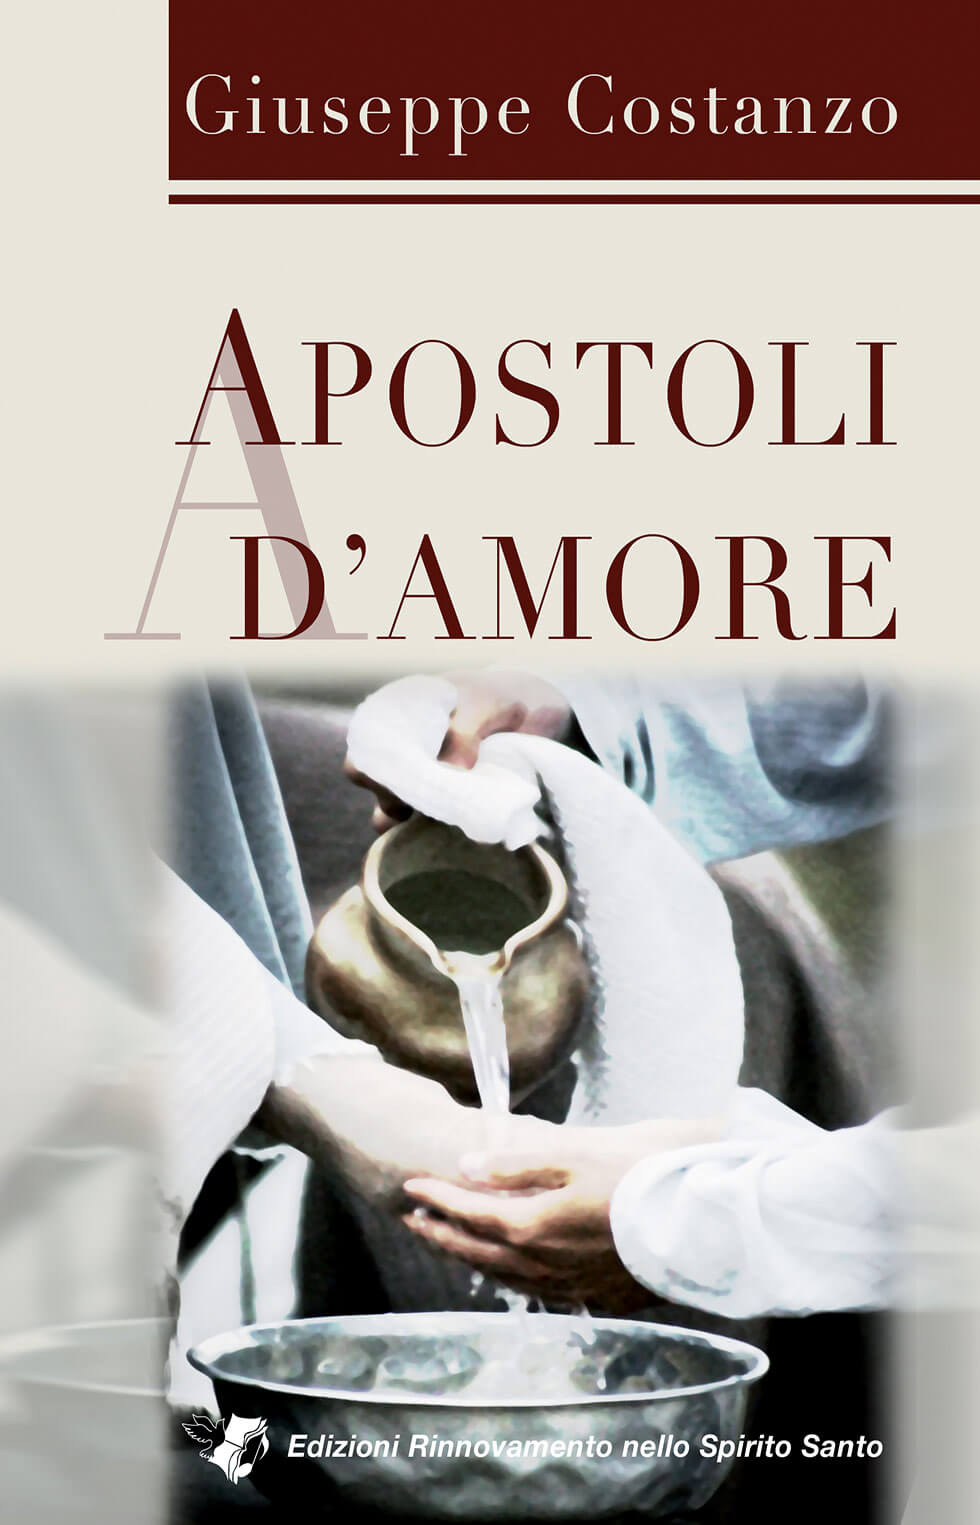 Apostoli-D'amore